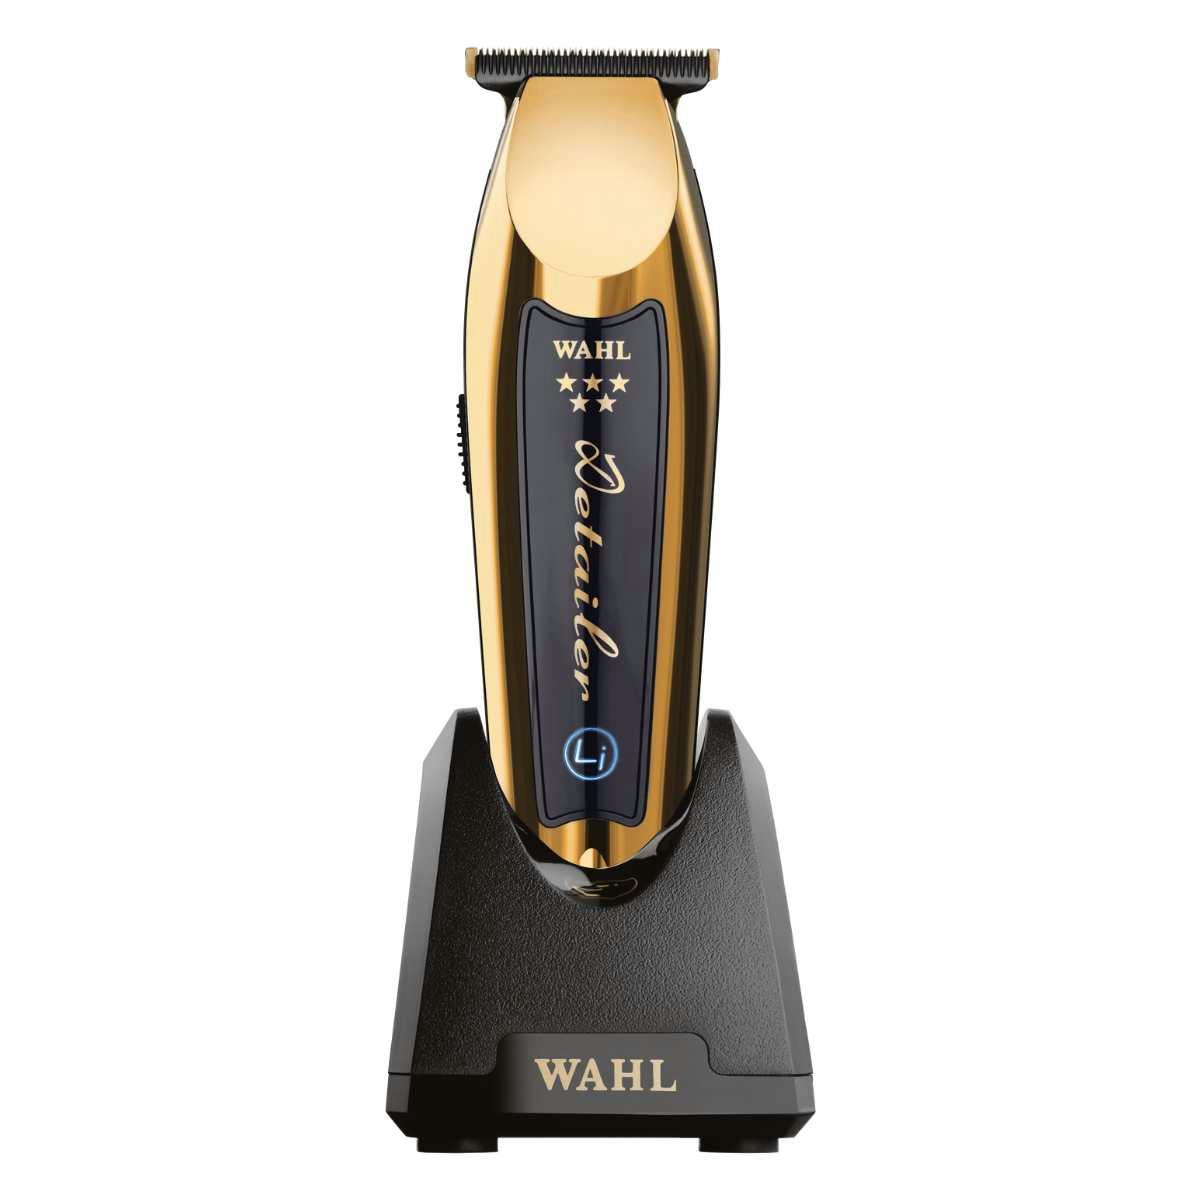 WAHL – Gold Cordless Detailer LI